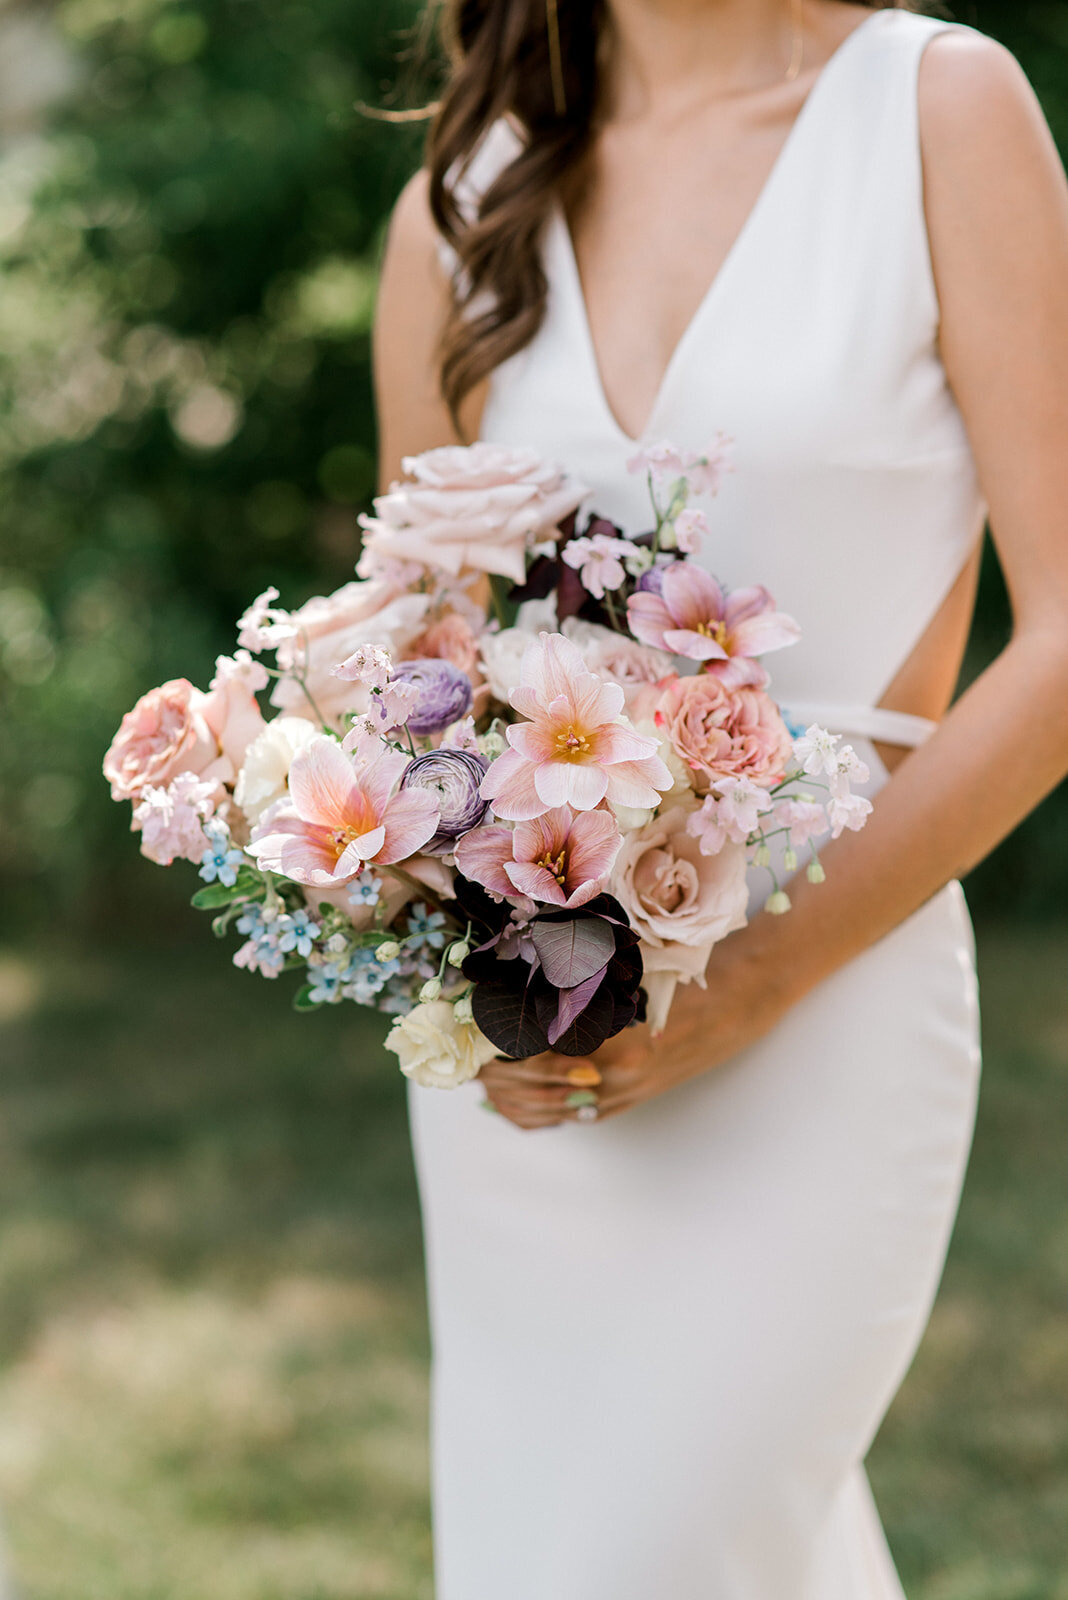 Bridal Portrait showing white dress and pink bouquet